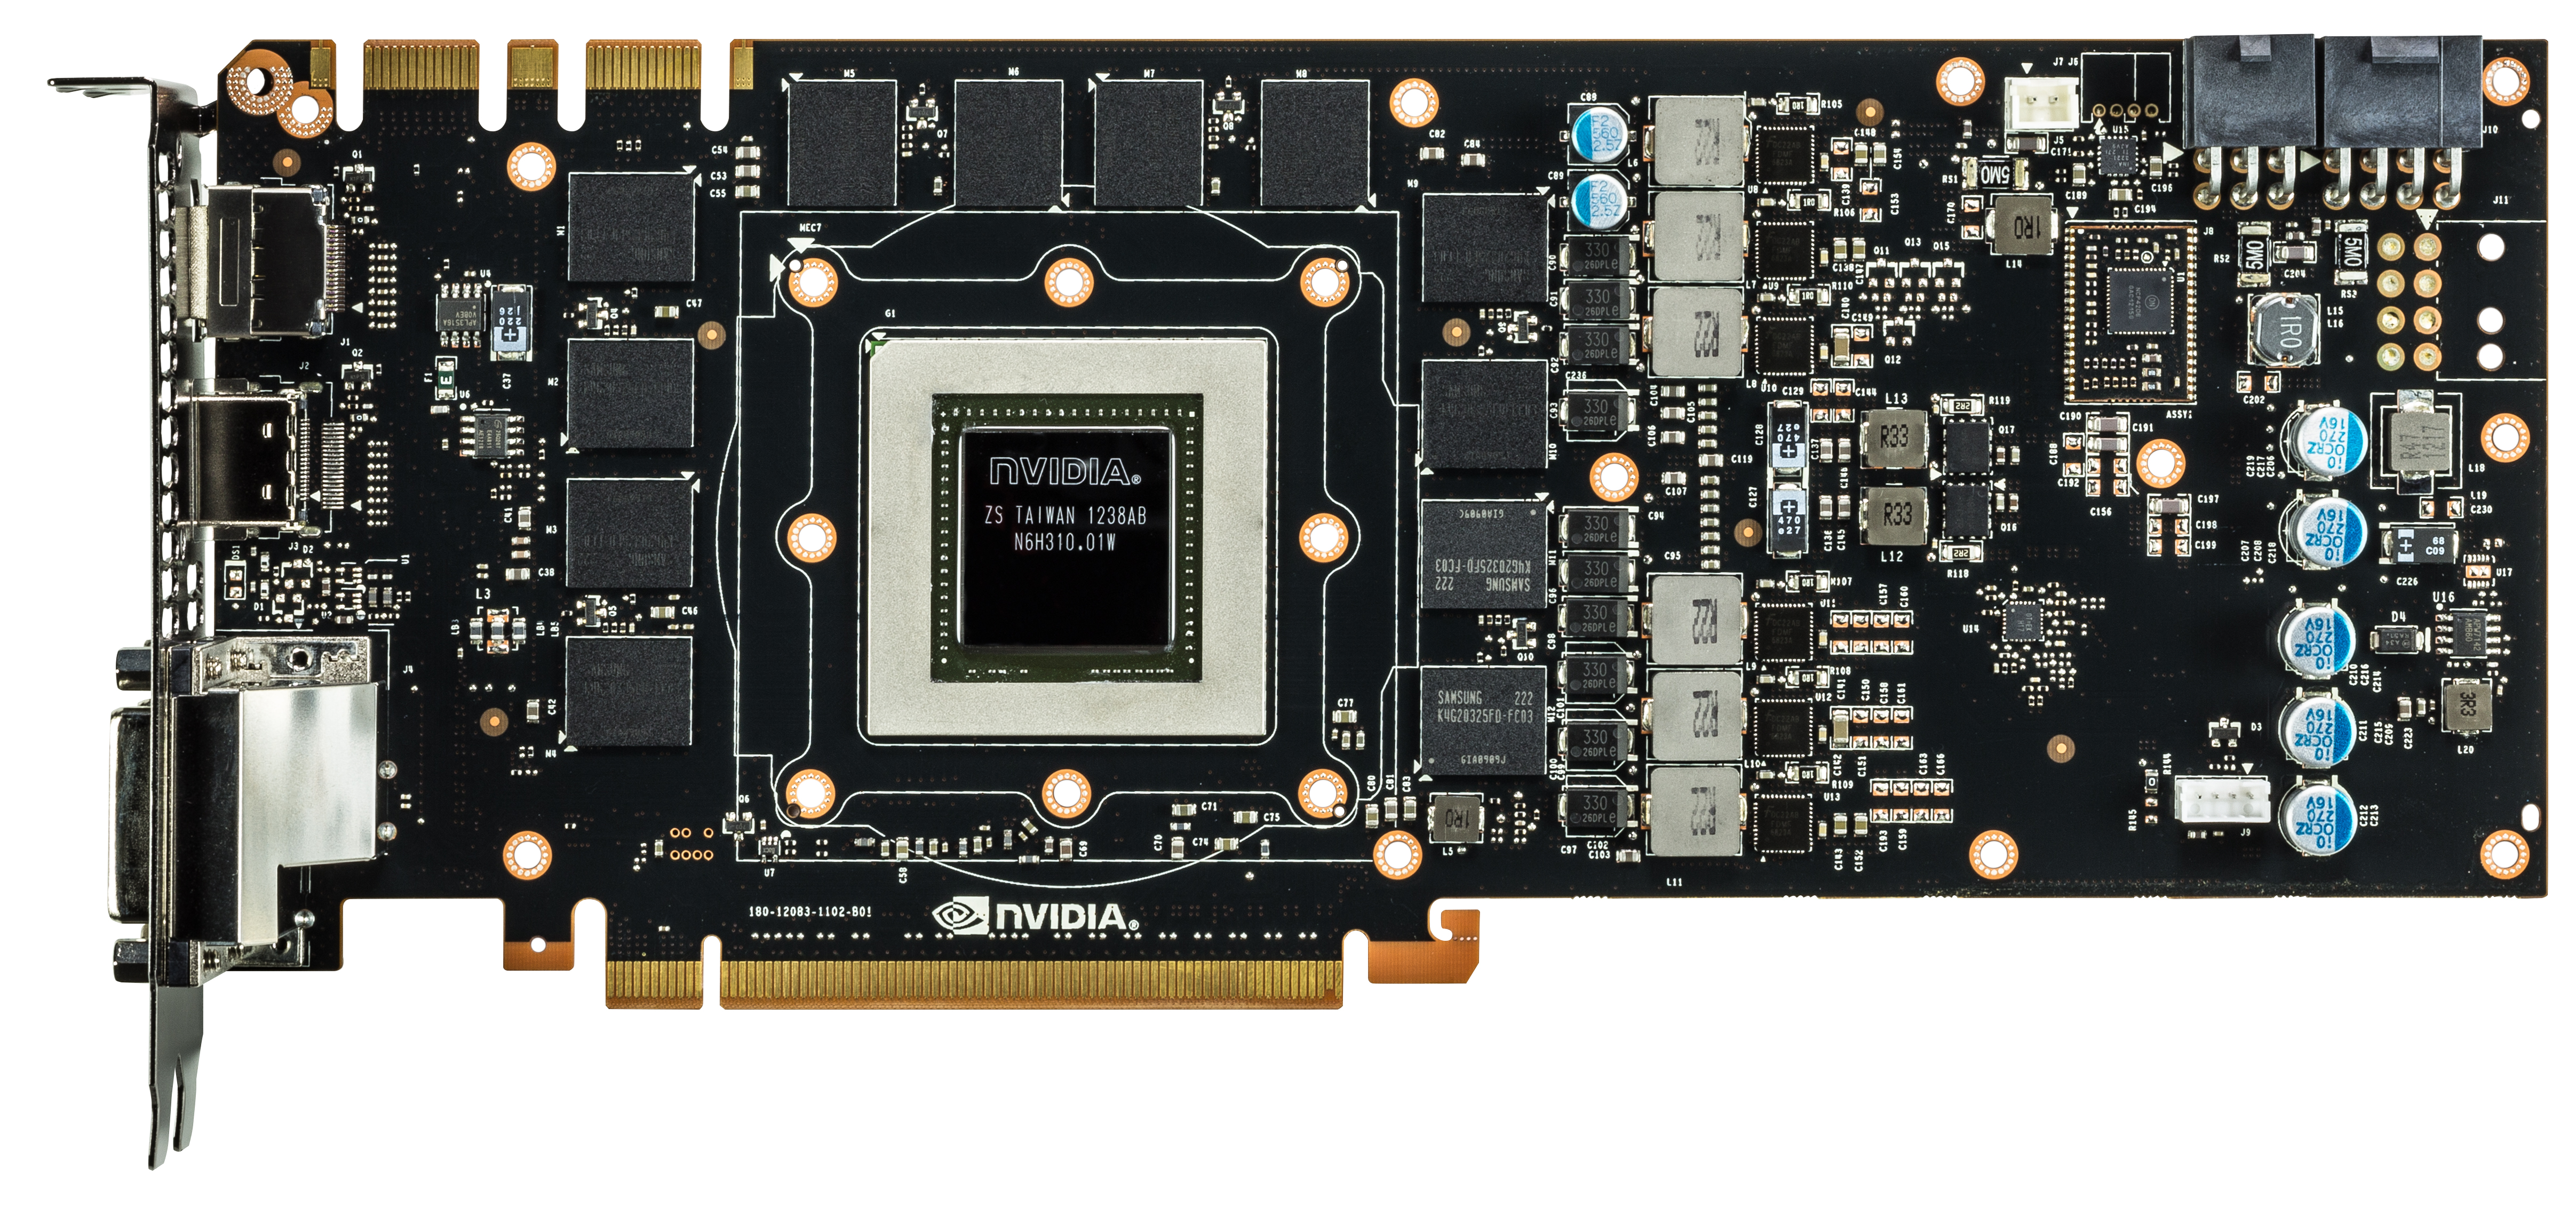 James Dyson mini study Meet The GeForce GTX 780 - NVIDIA GeForce GTX 780 Review: The New High End